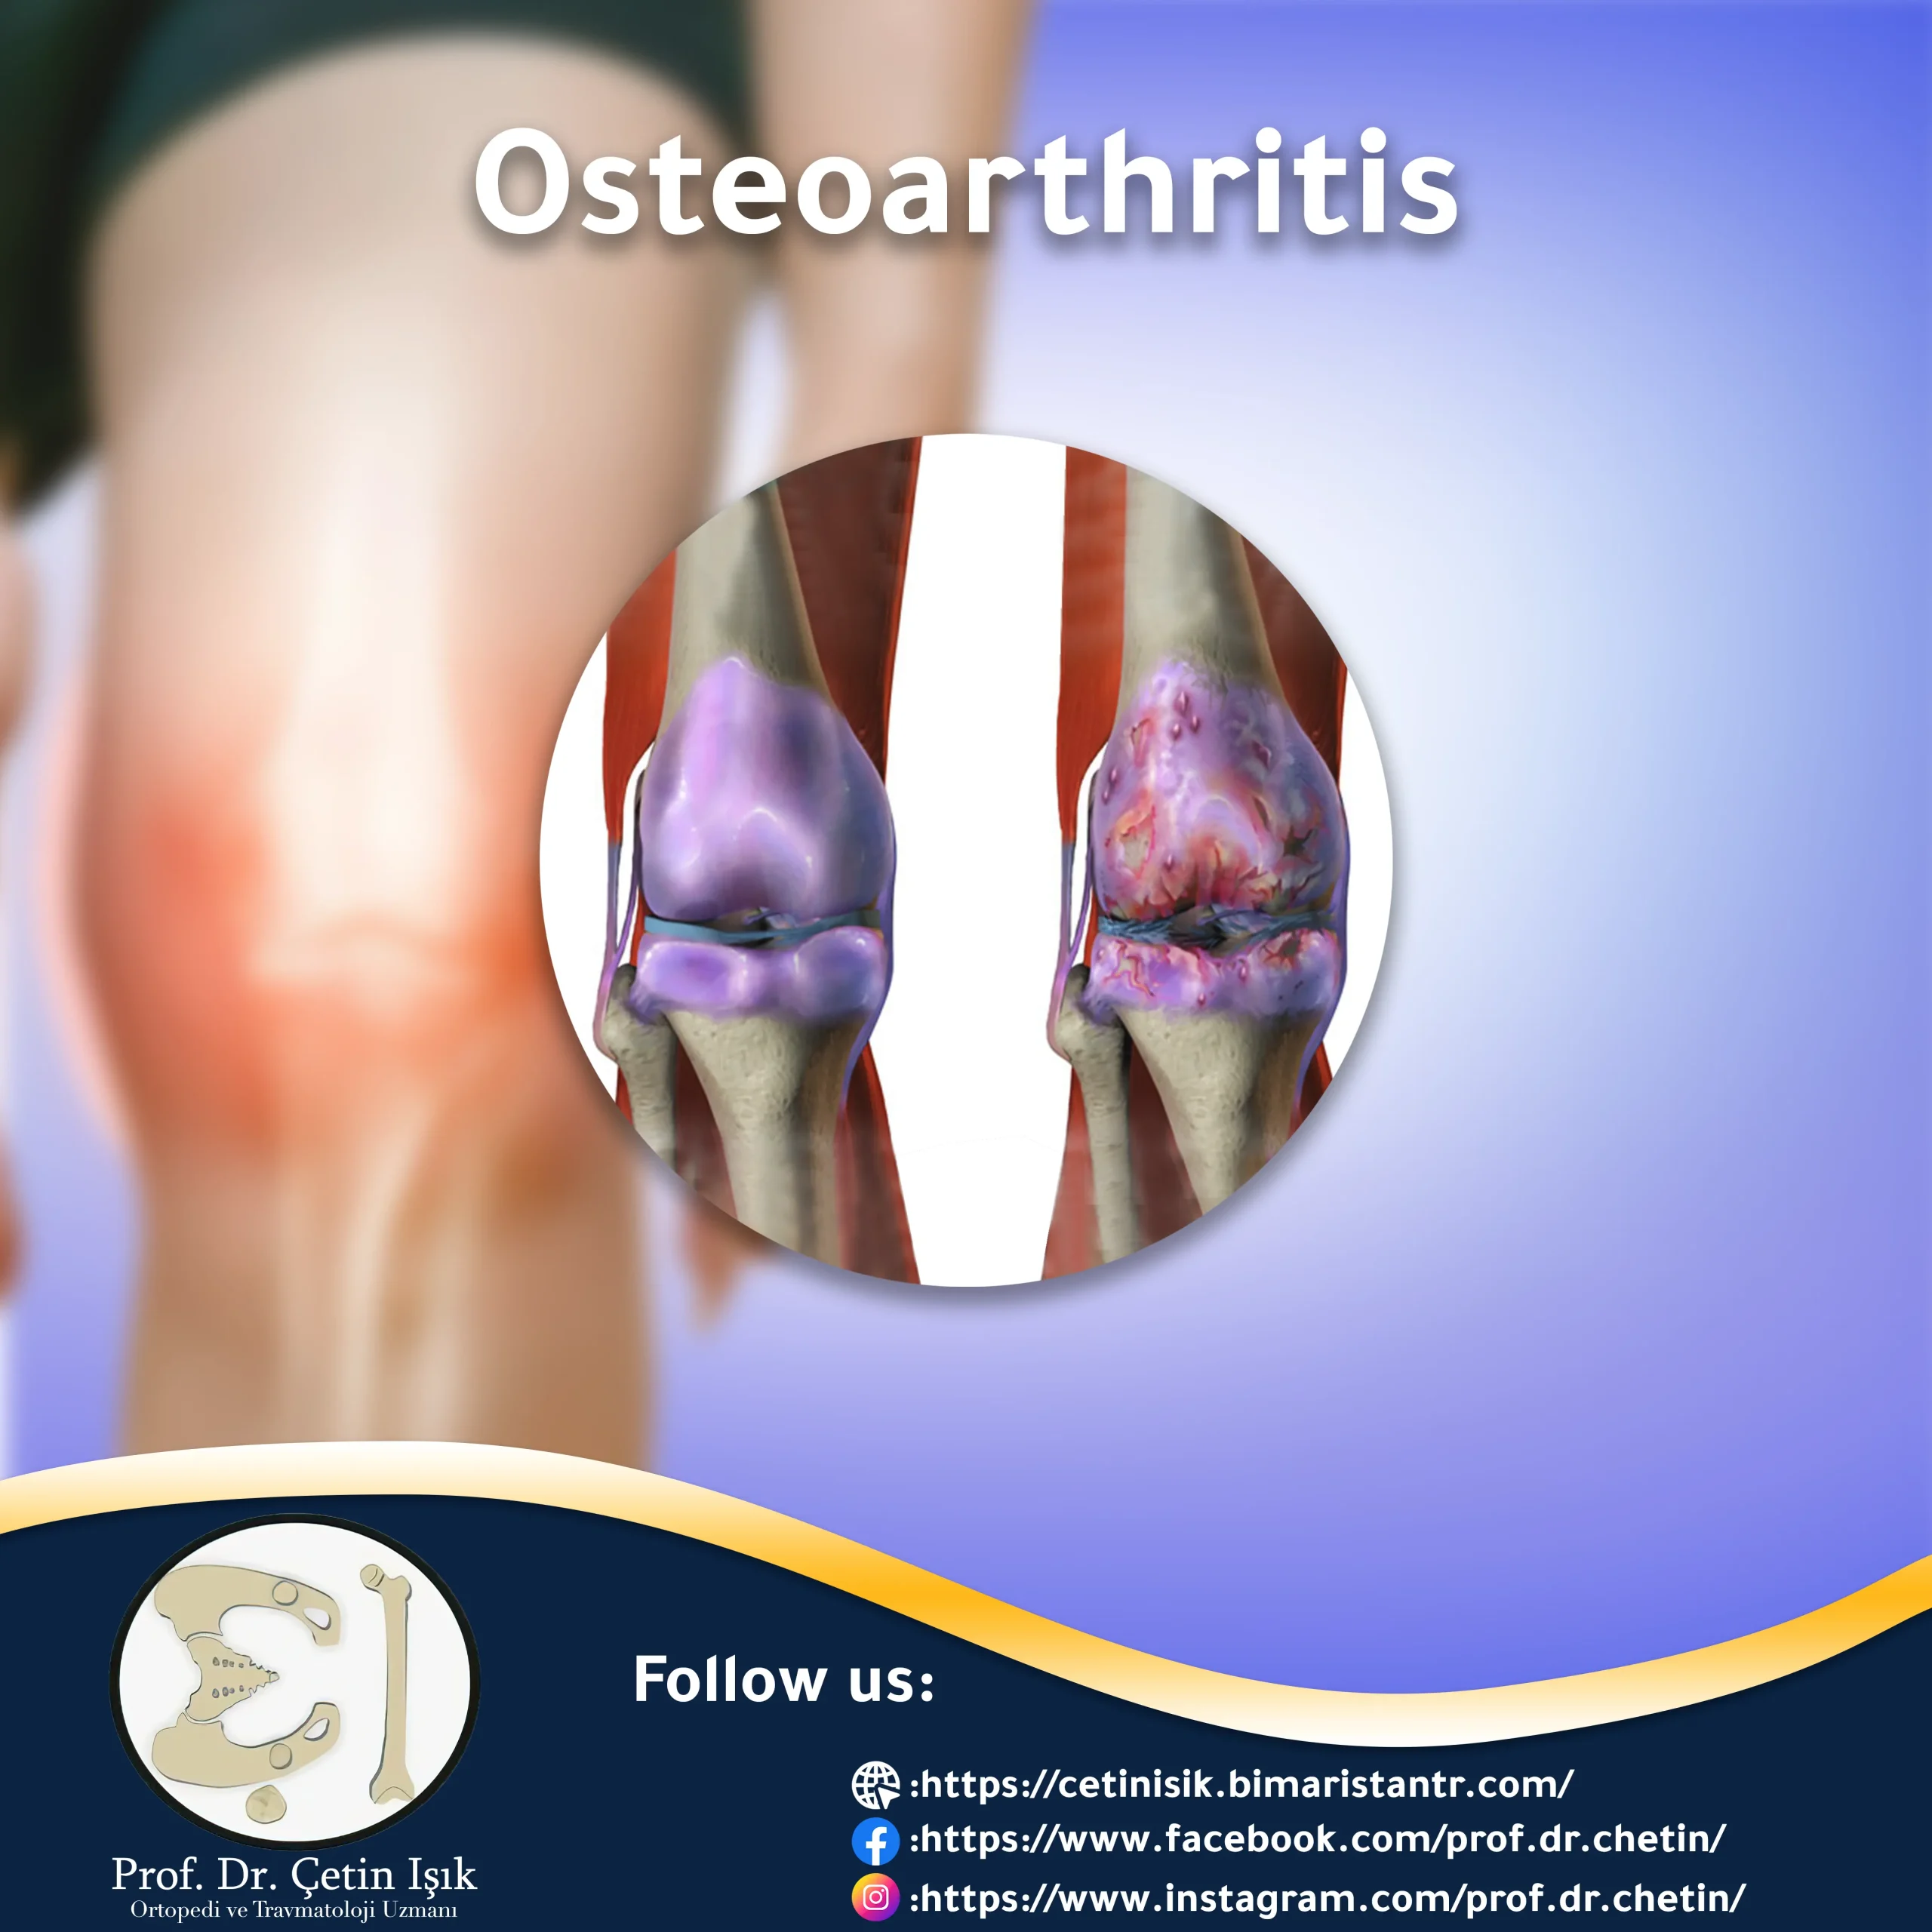 Image showing osteoarthritis